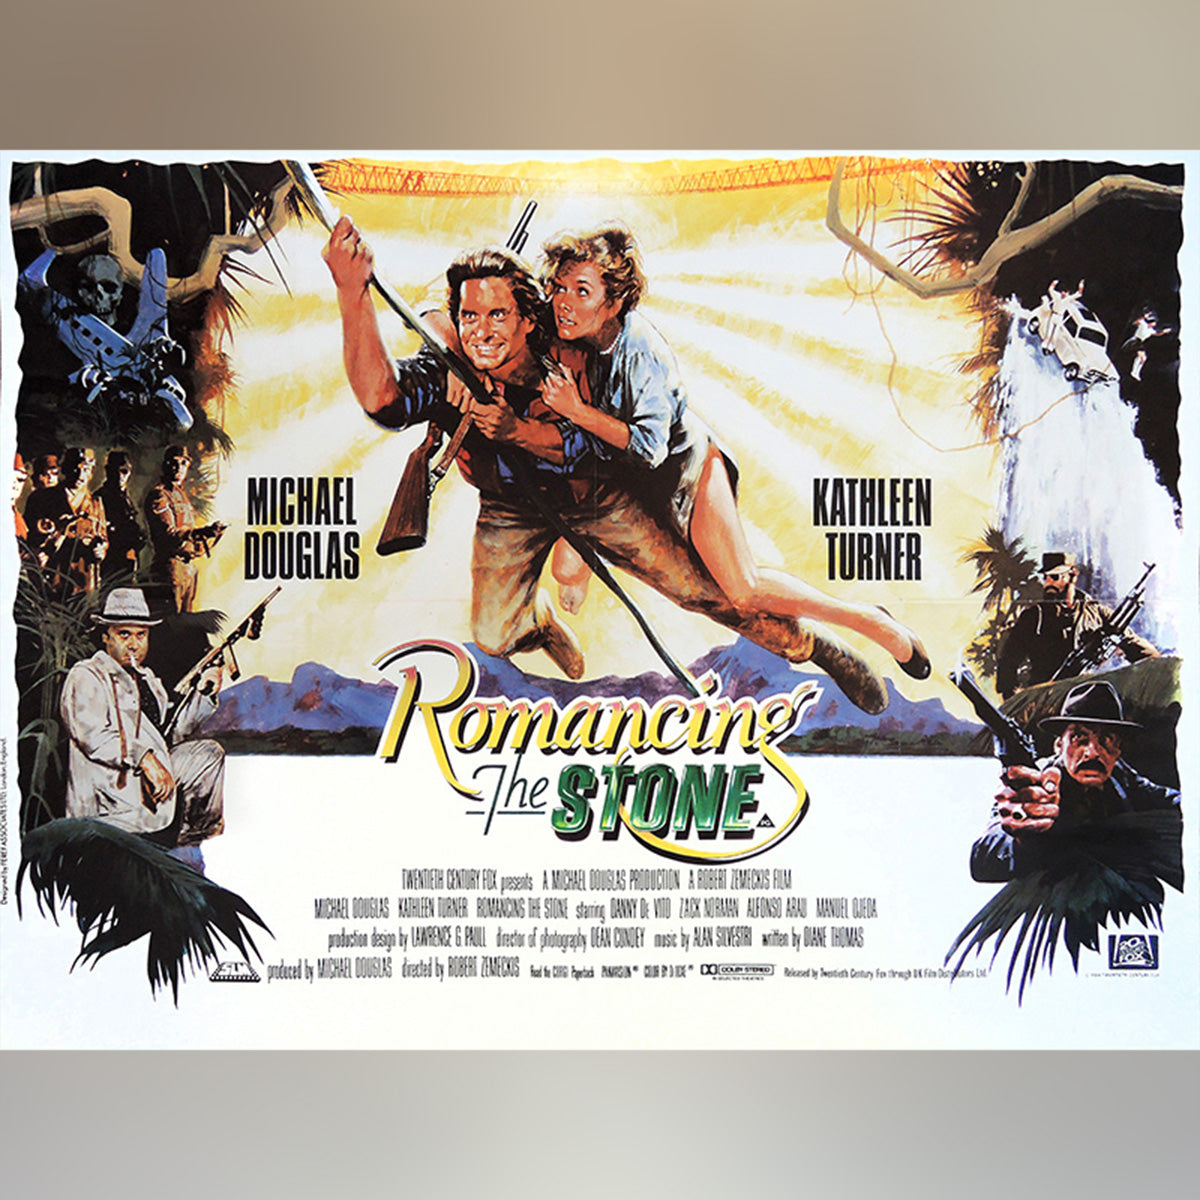 Original Movie Poster of Romancing The Stone (1984)